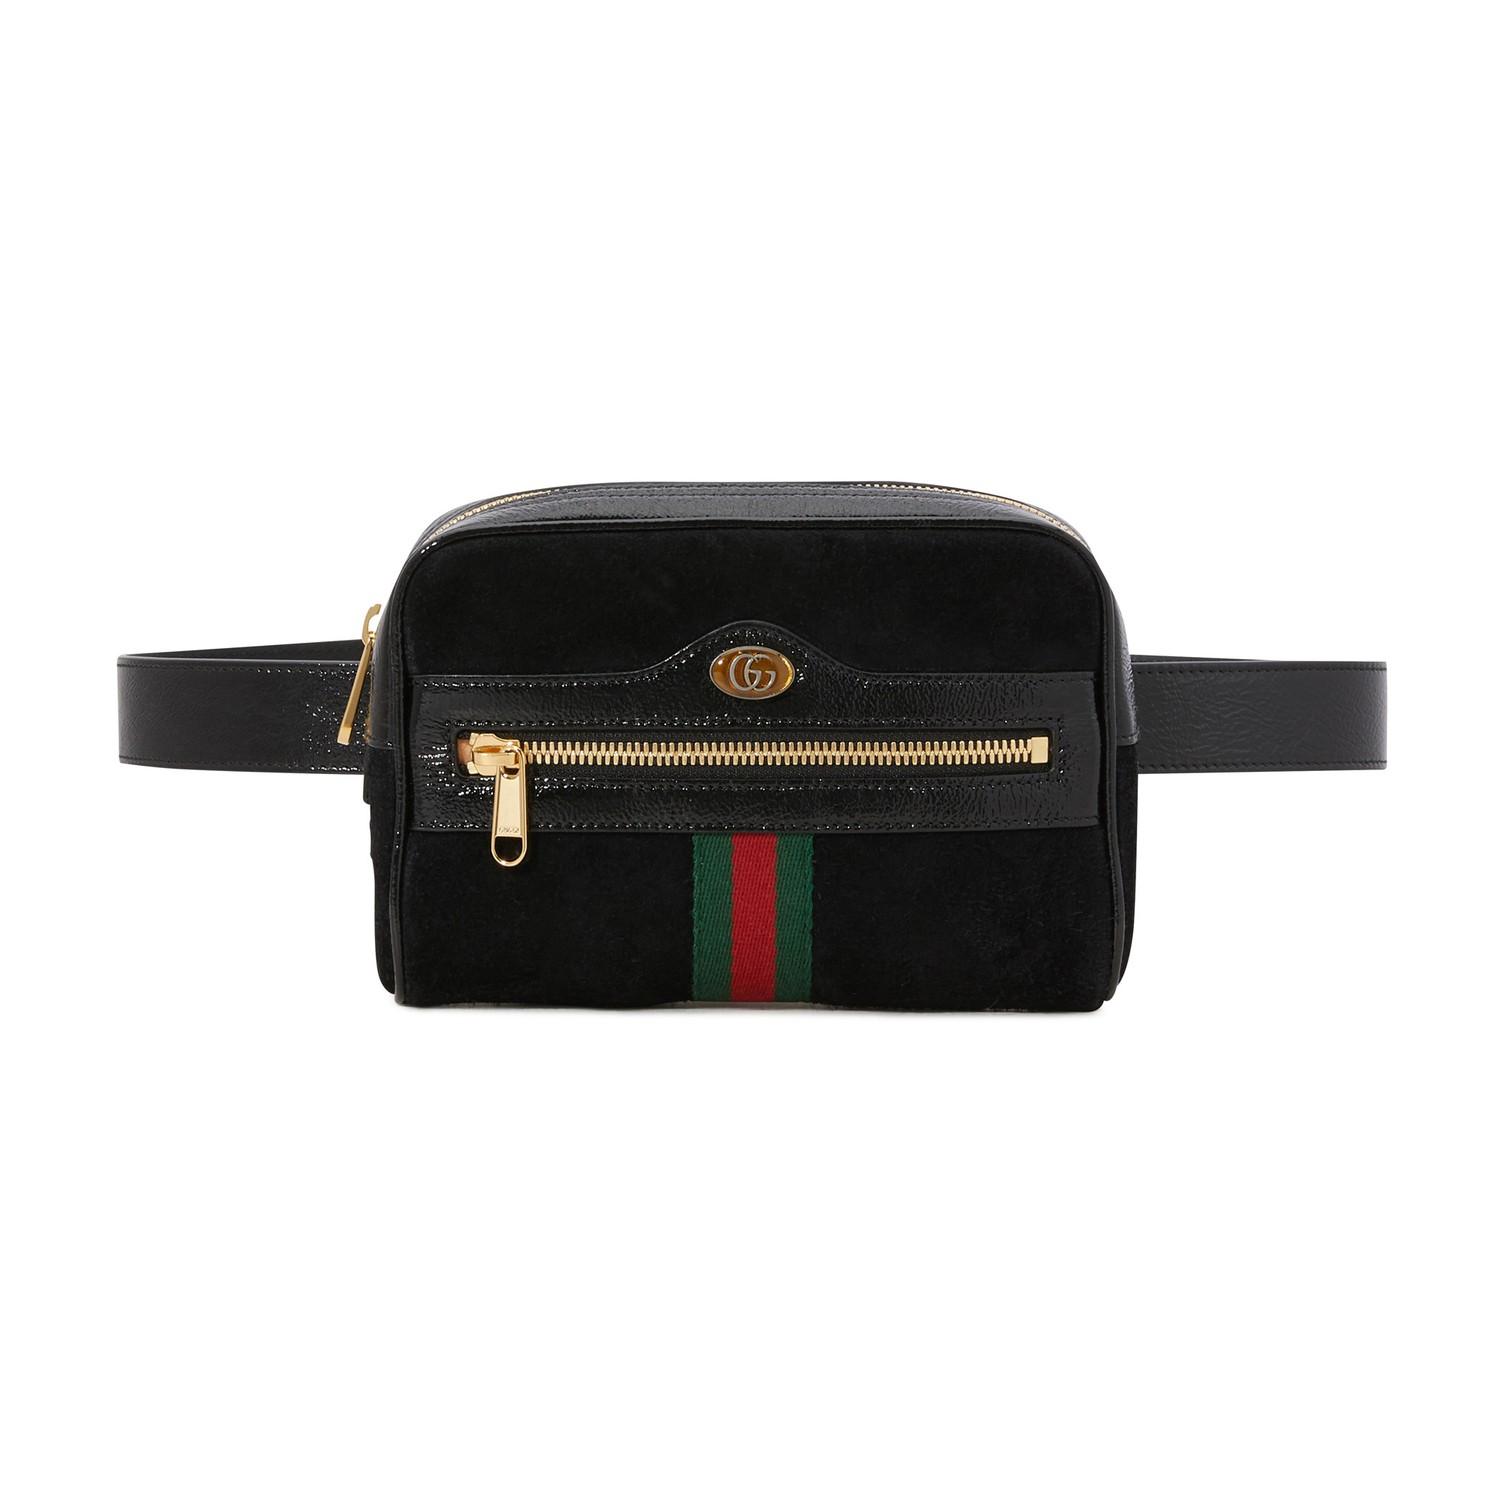 Gucci Ophidia Belt Bag in Black - Lyst